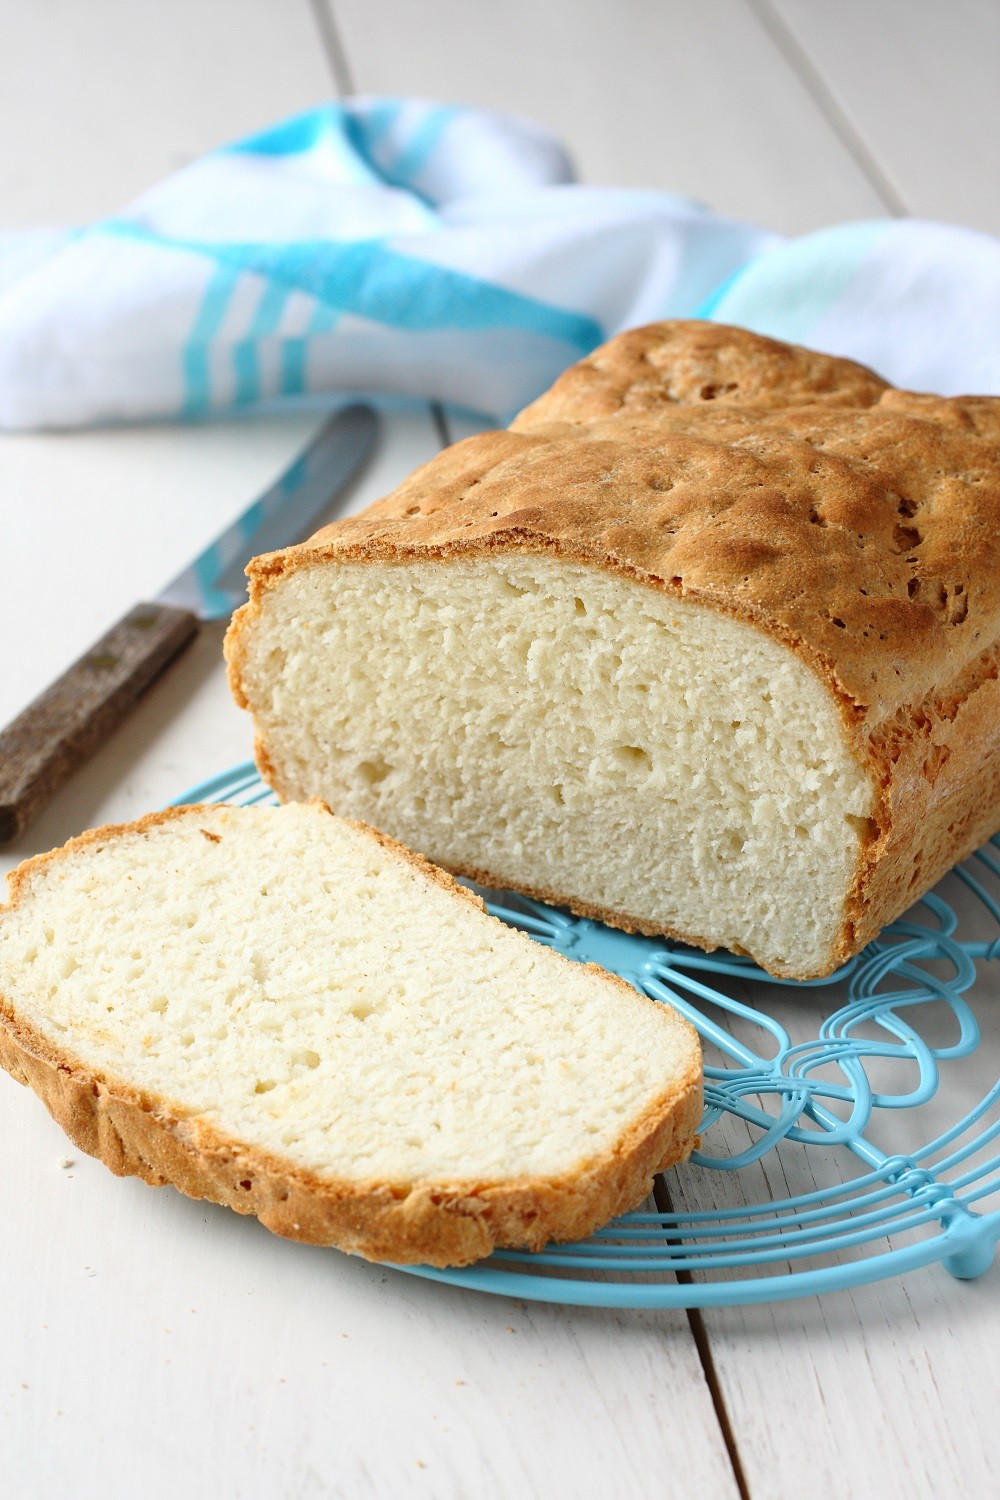 Homemade gluten free bread on blue metal grid